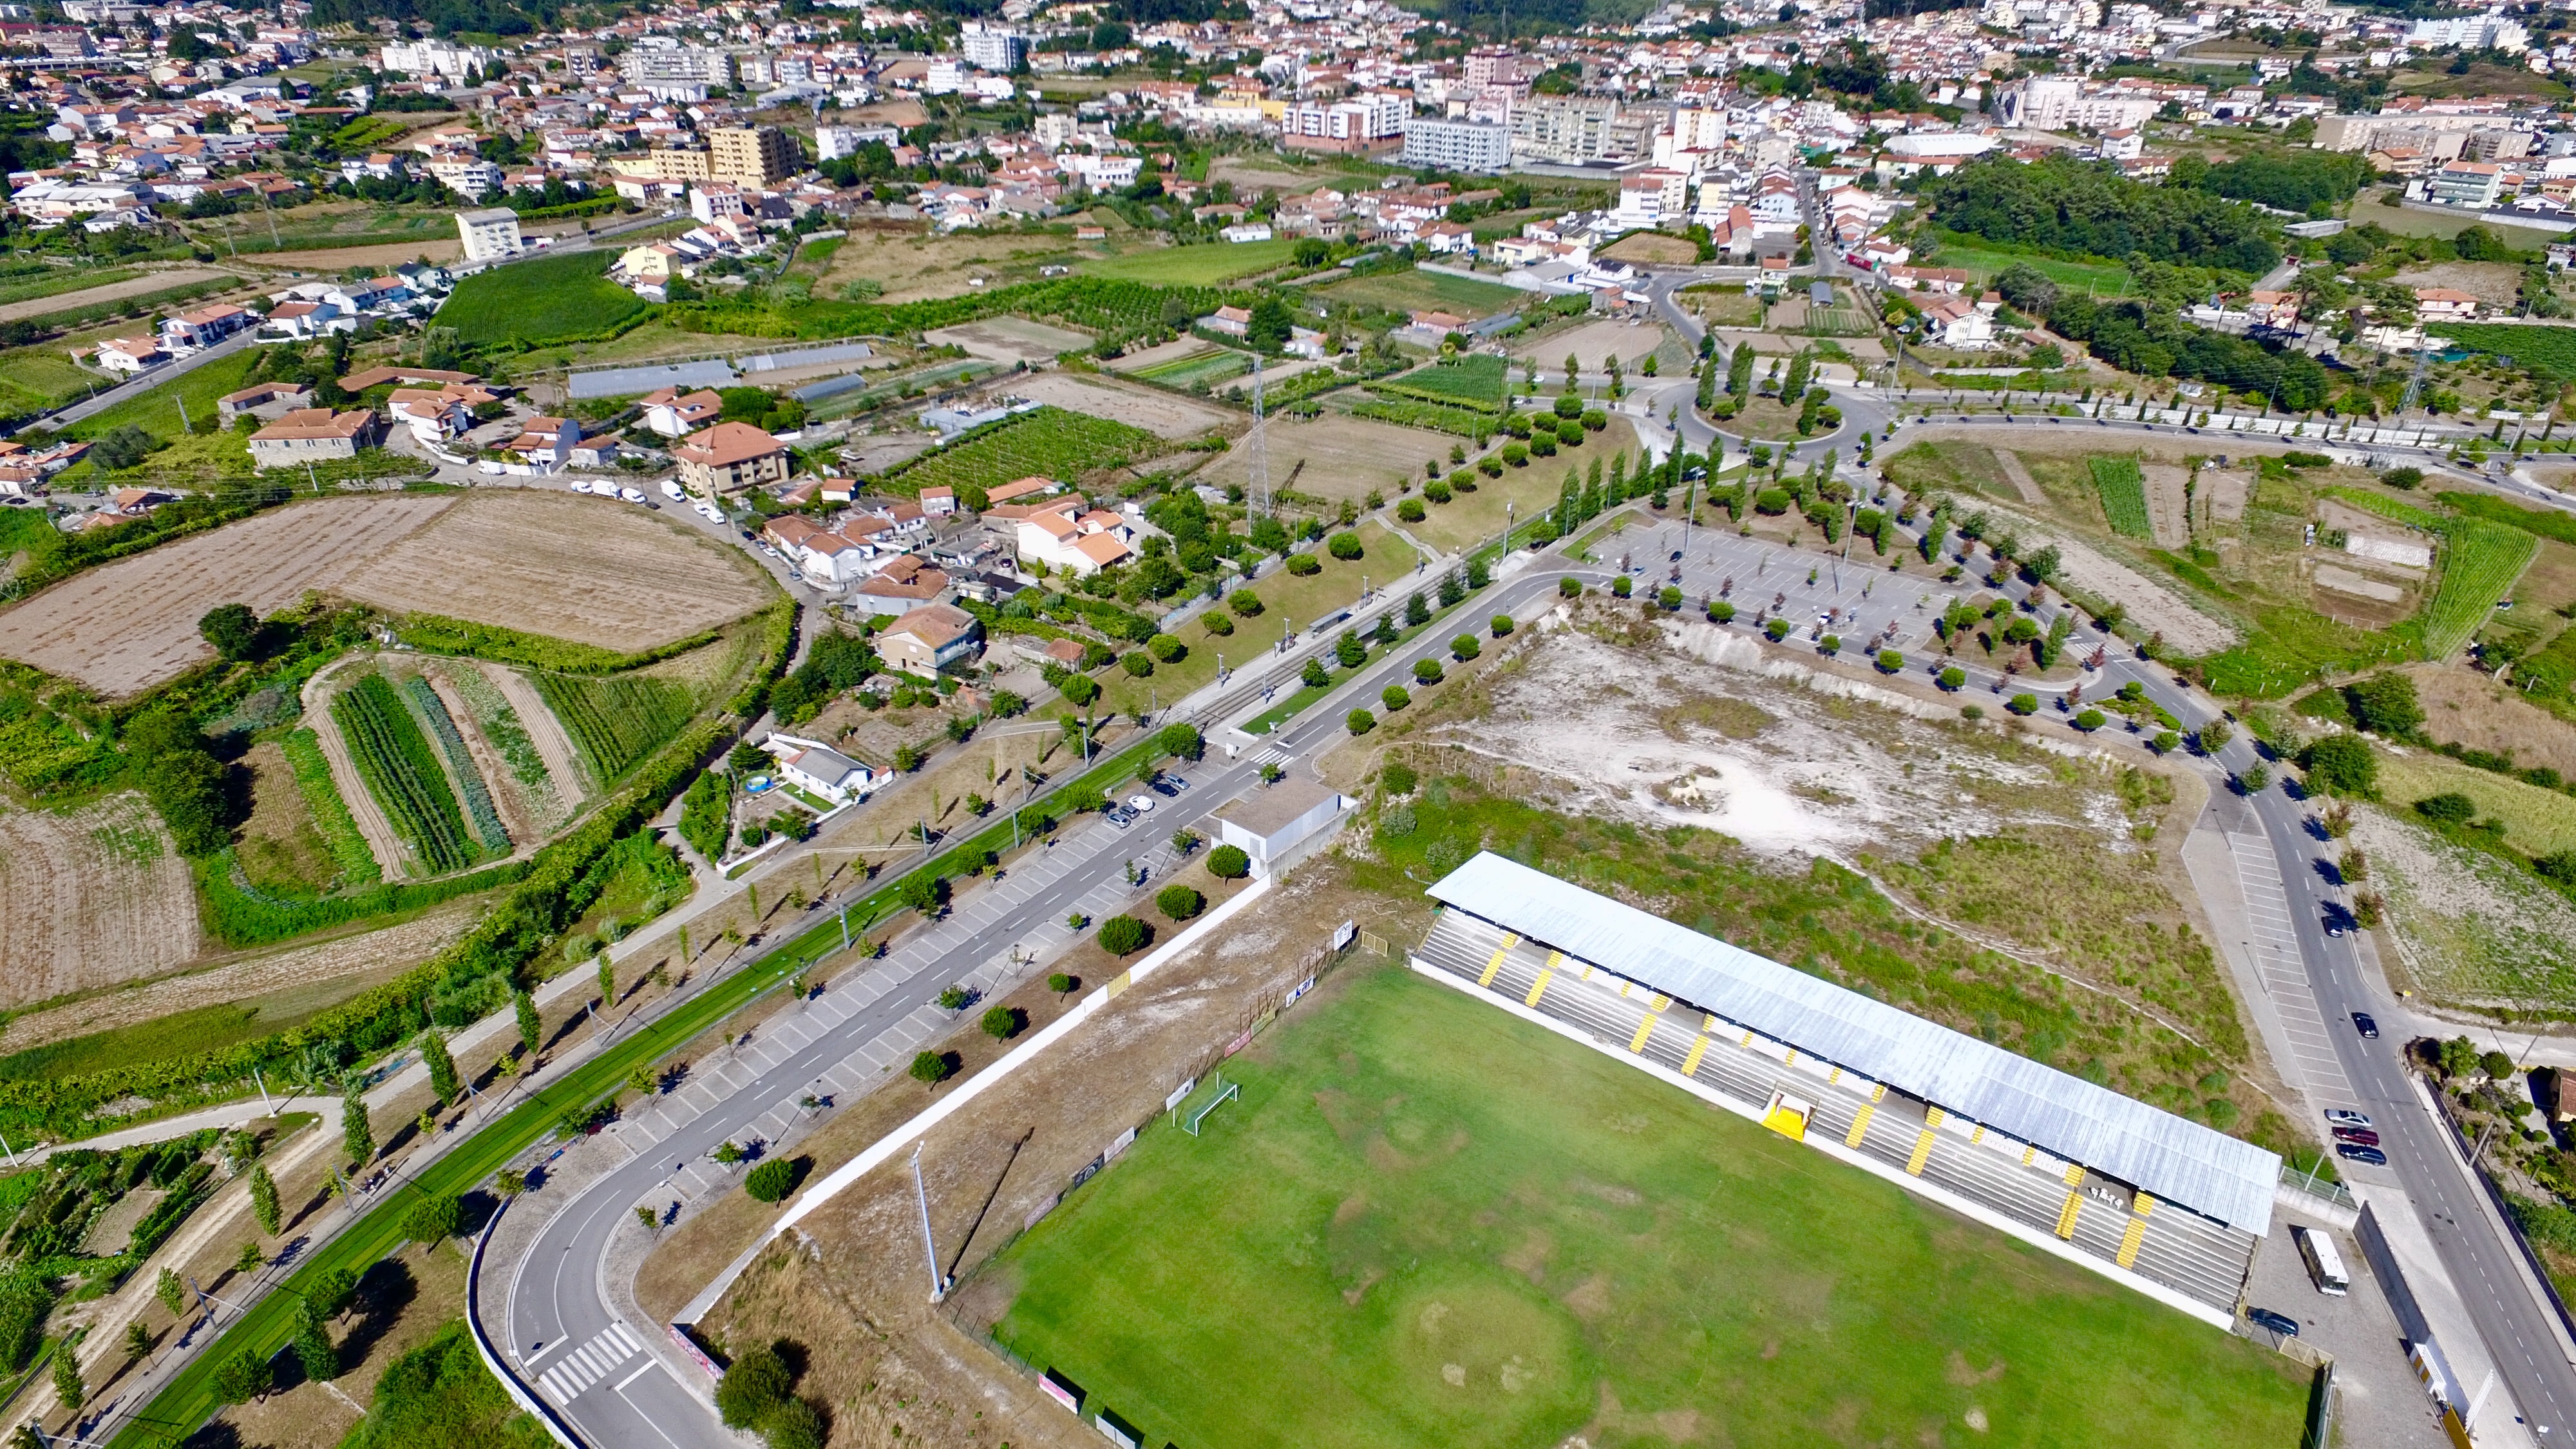 Campo de Futebol Rio Tinto